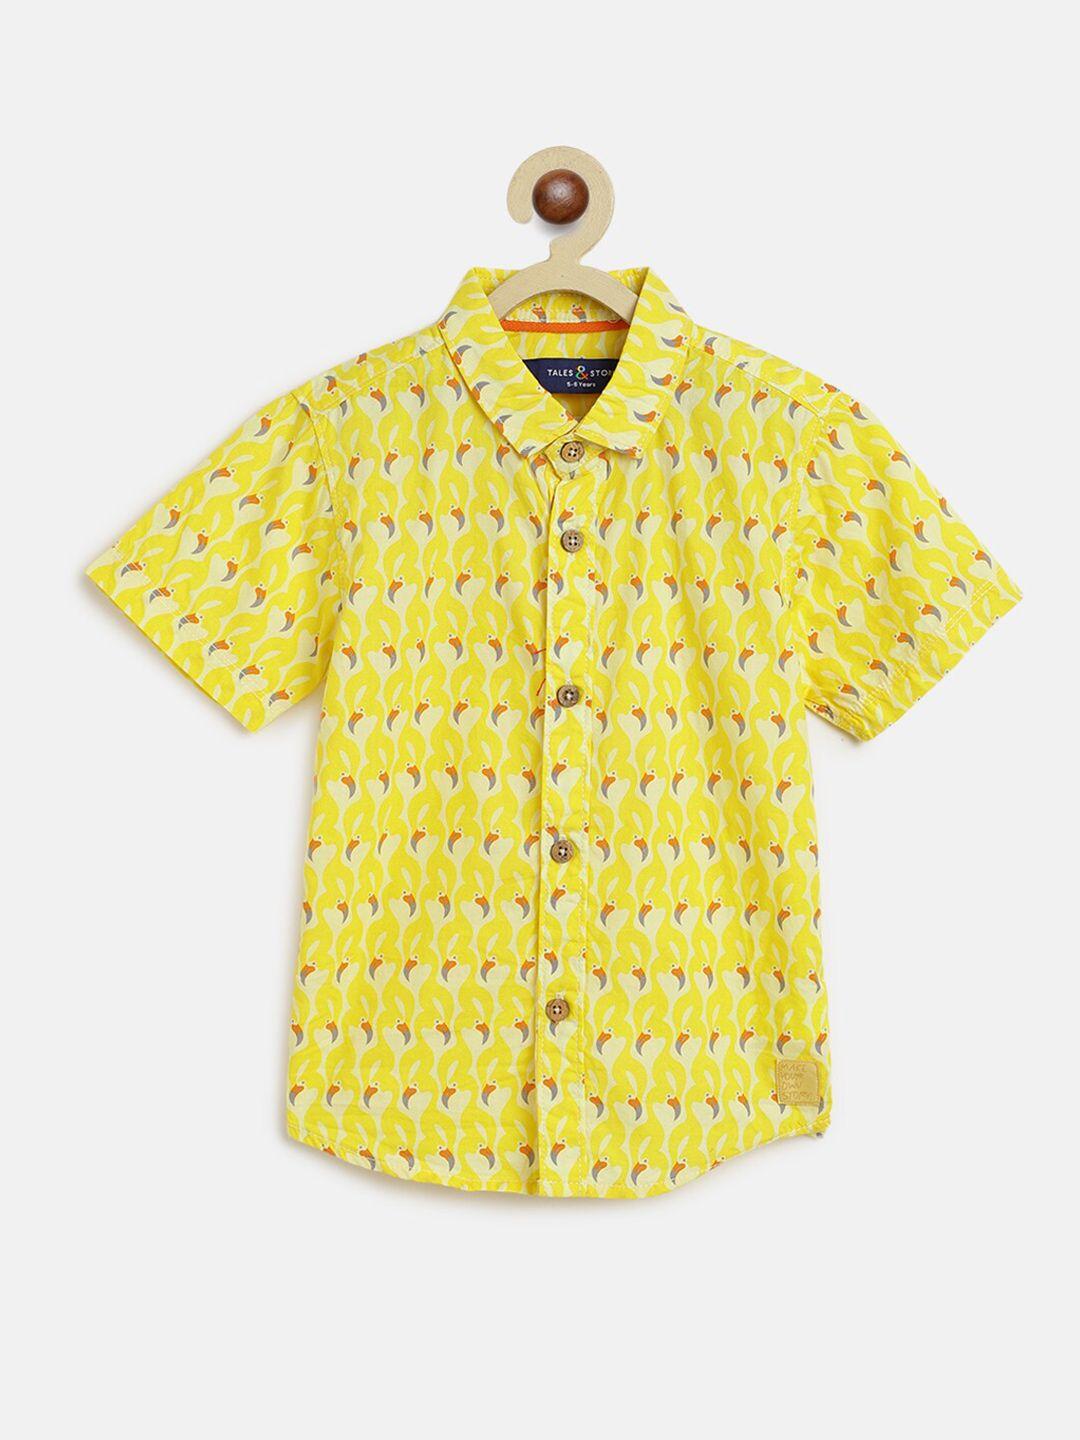 tales-&-stories-boys-yellow-printed-casual-shirt